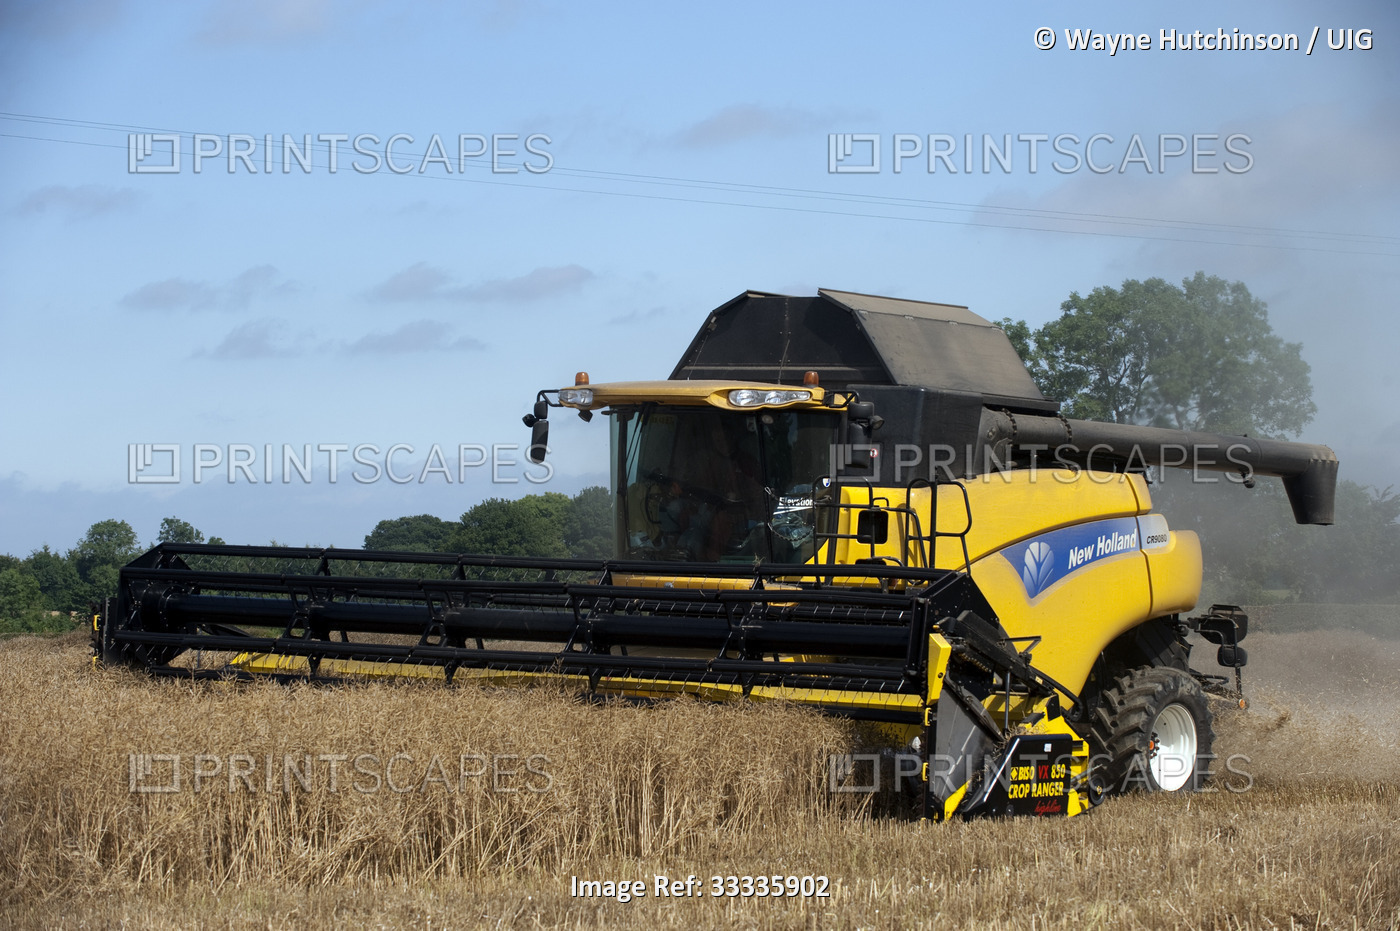 New Holland combine harvesting Oilseed Rape or Canola crop.